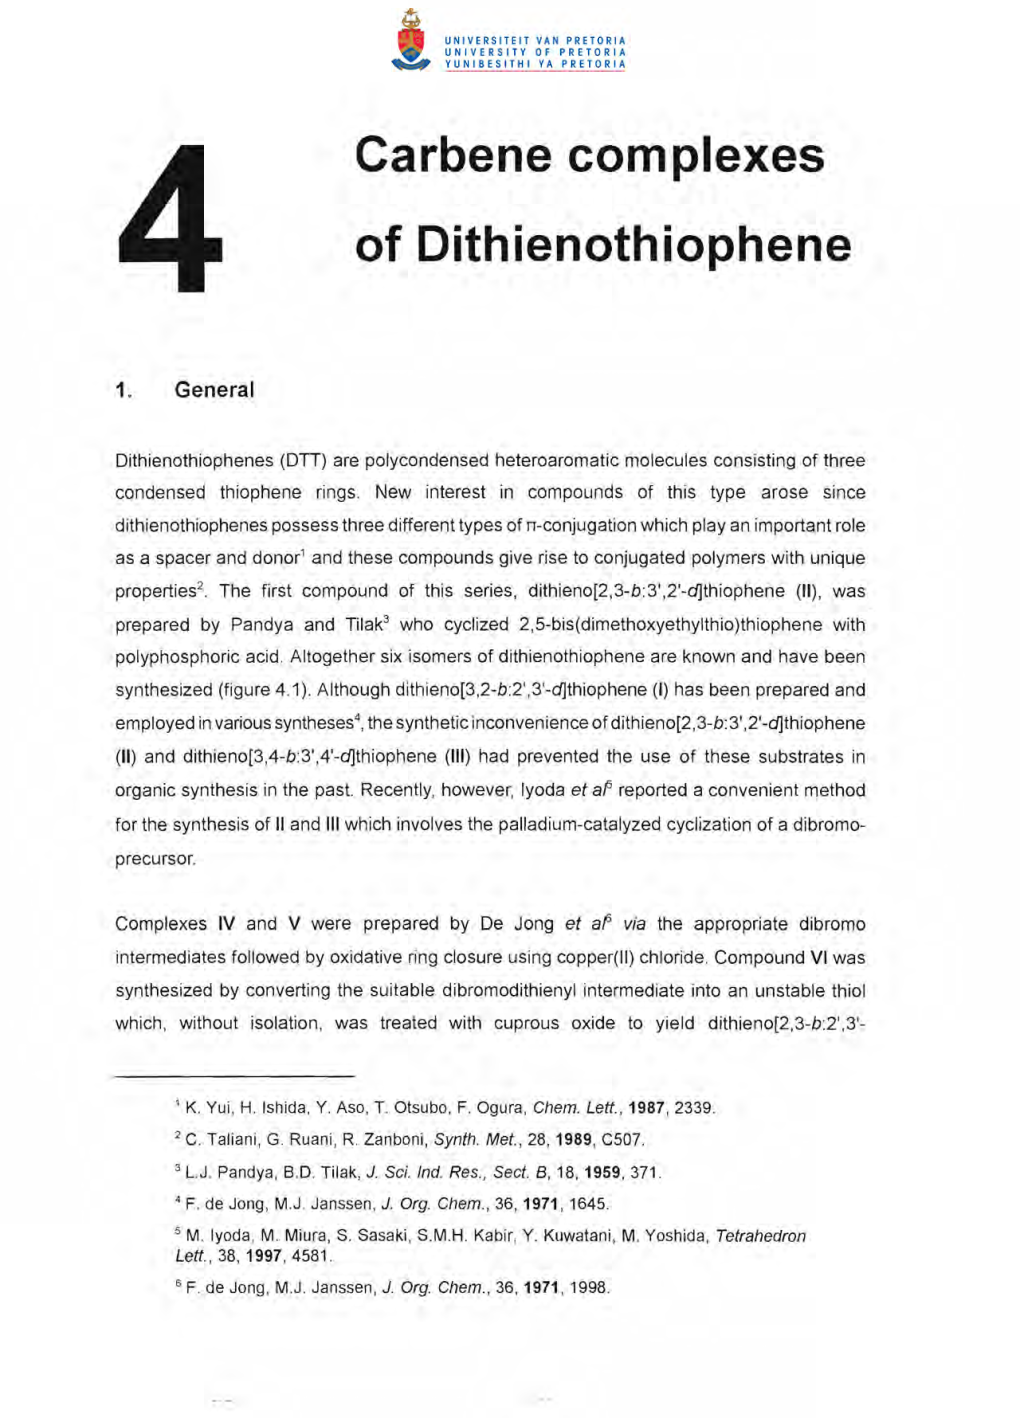 Carbene Com Plexes of Dithienothiophene